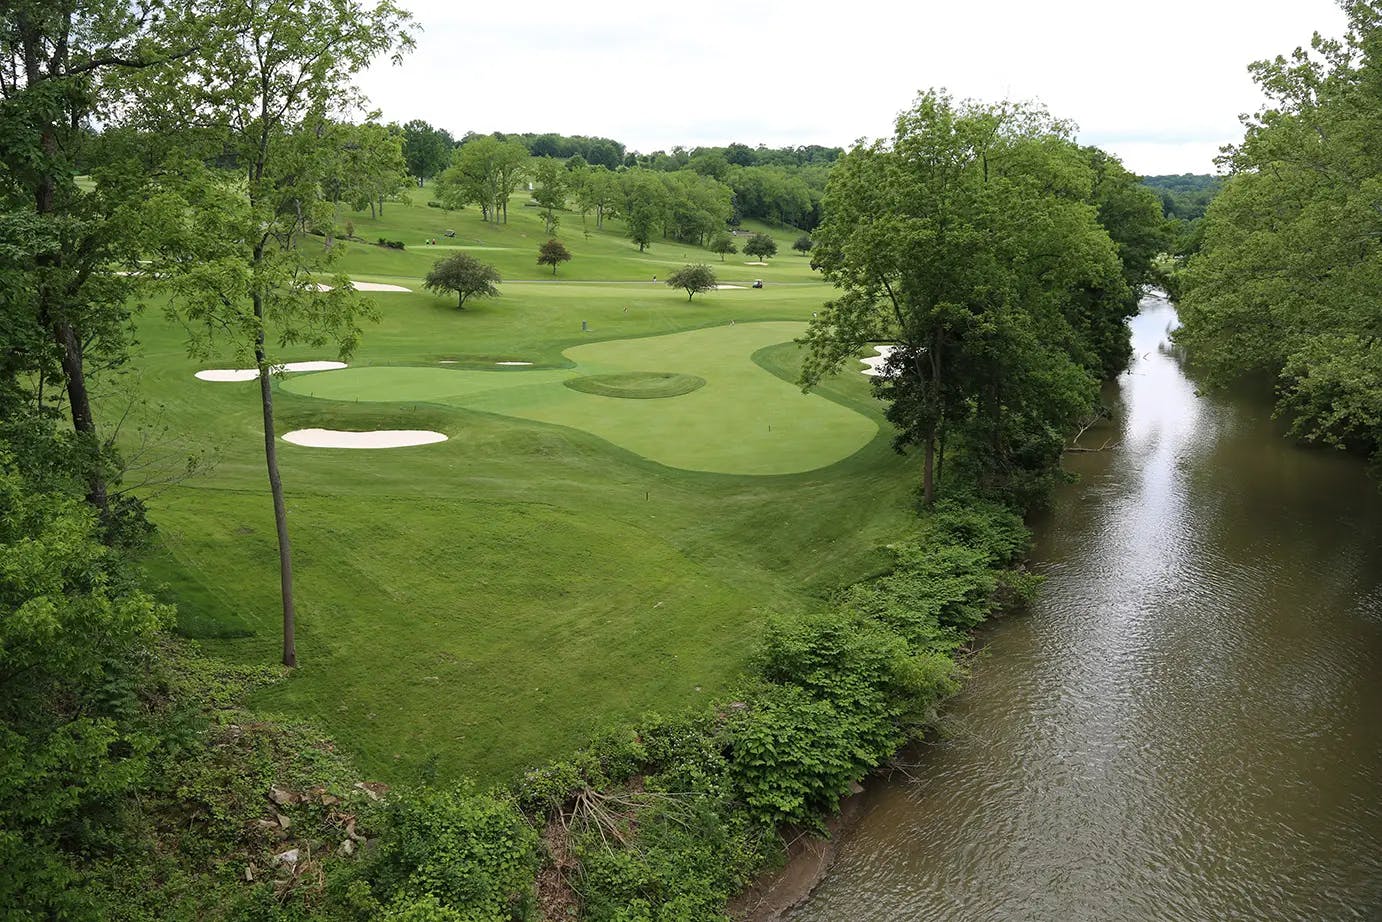 Birdseye view of a golf course.